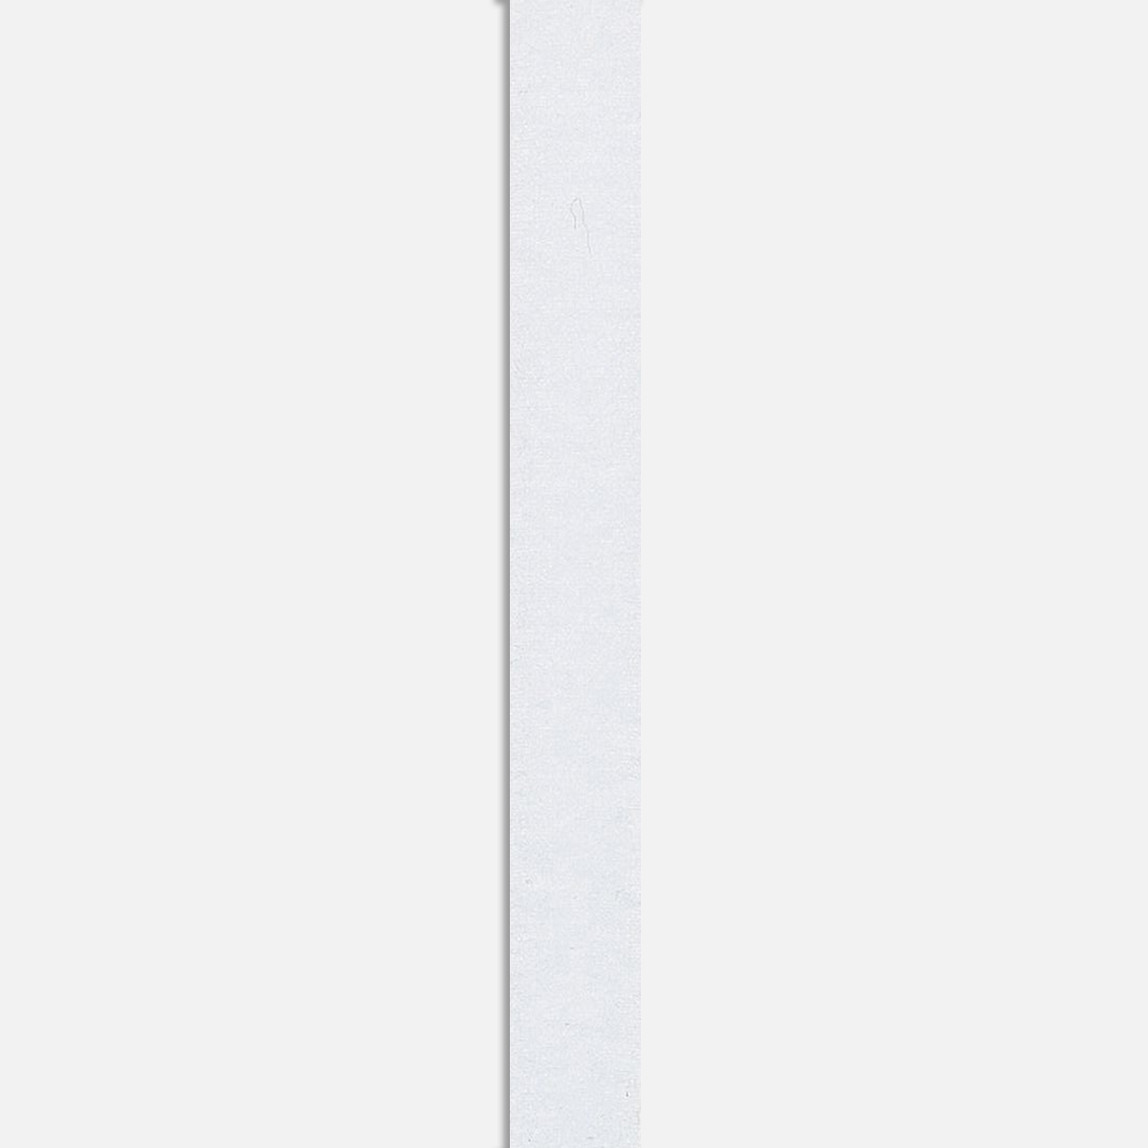    Stabilit Cırt Bant 20mm Beyaz 